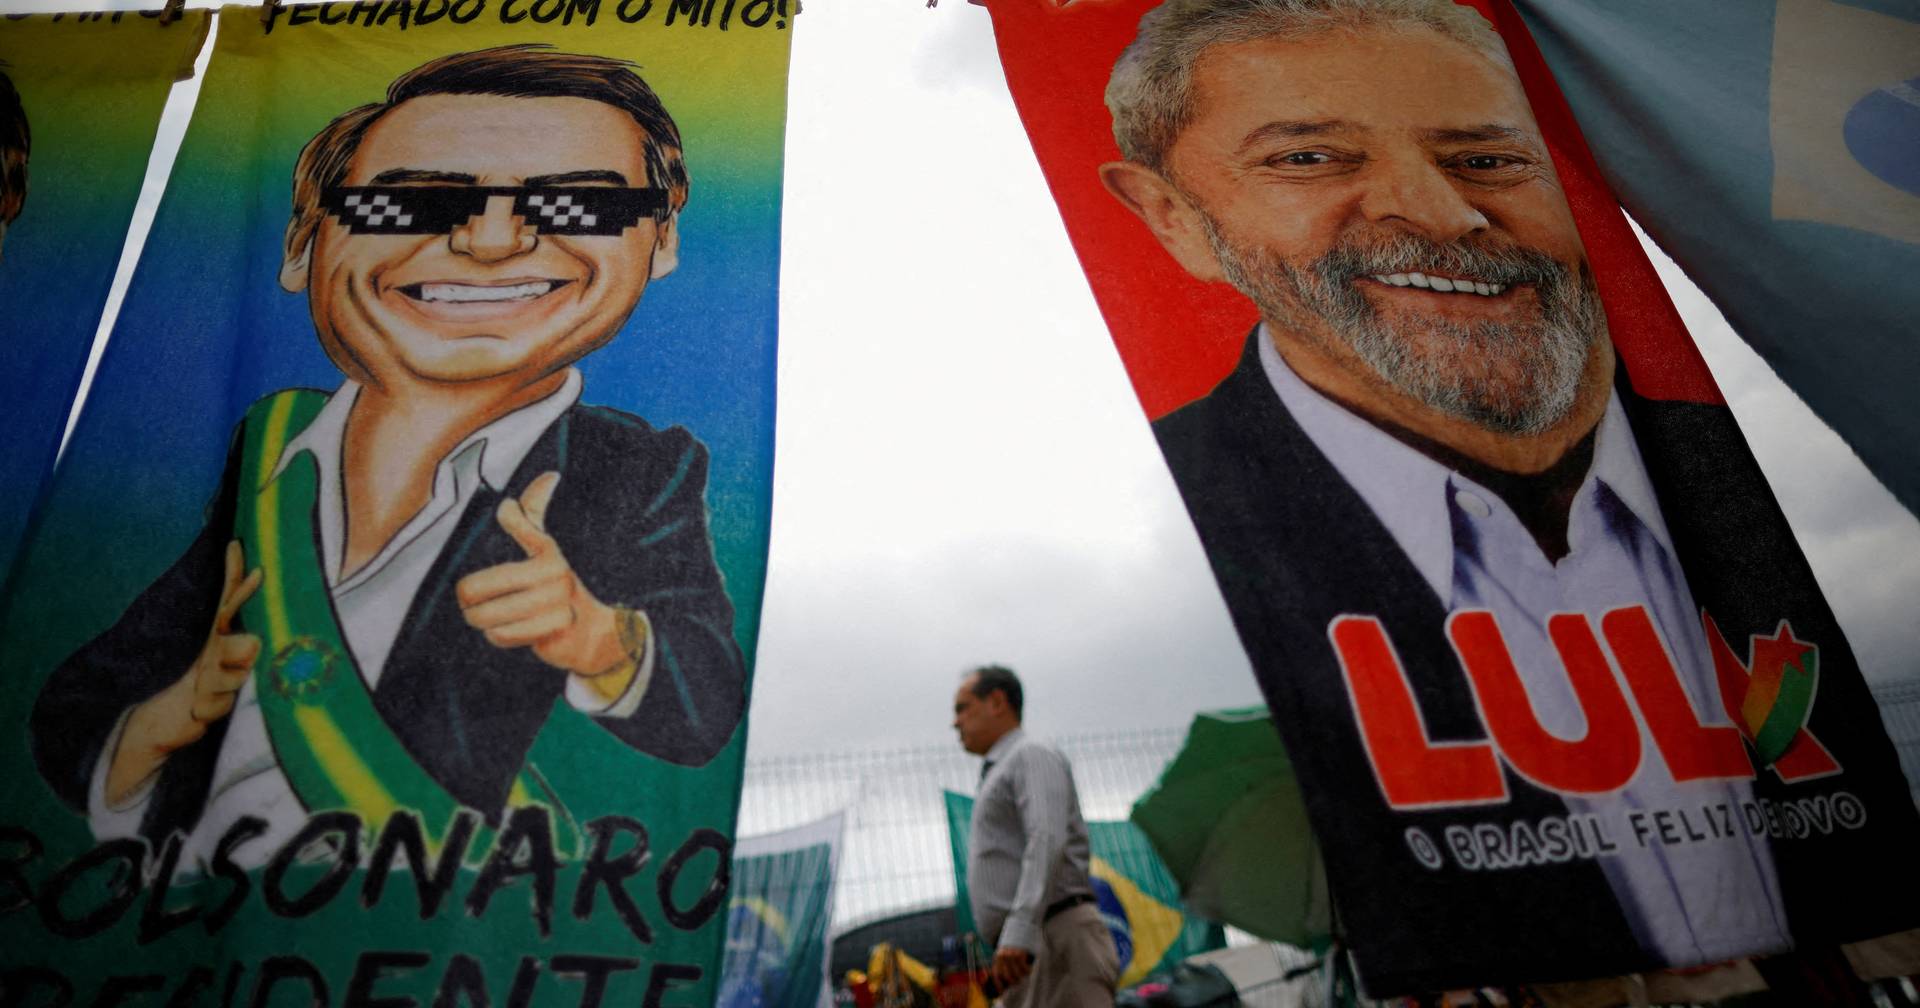 Partido de Bolsonaro elege oito senadores. Será que Lula ainda é o preferido para Presidente?